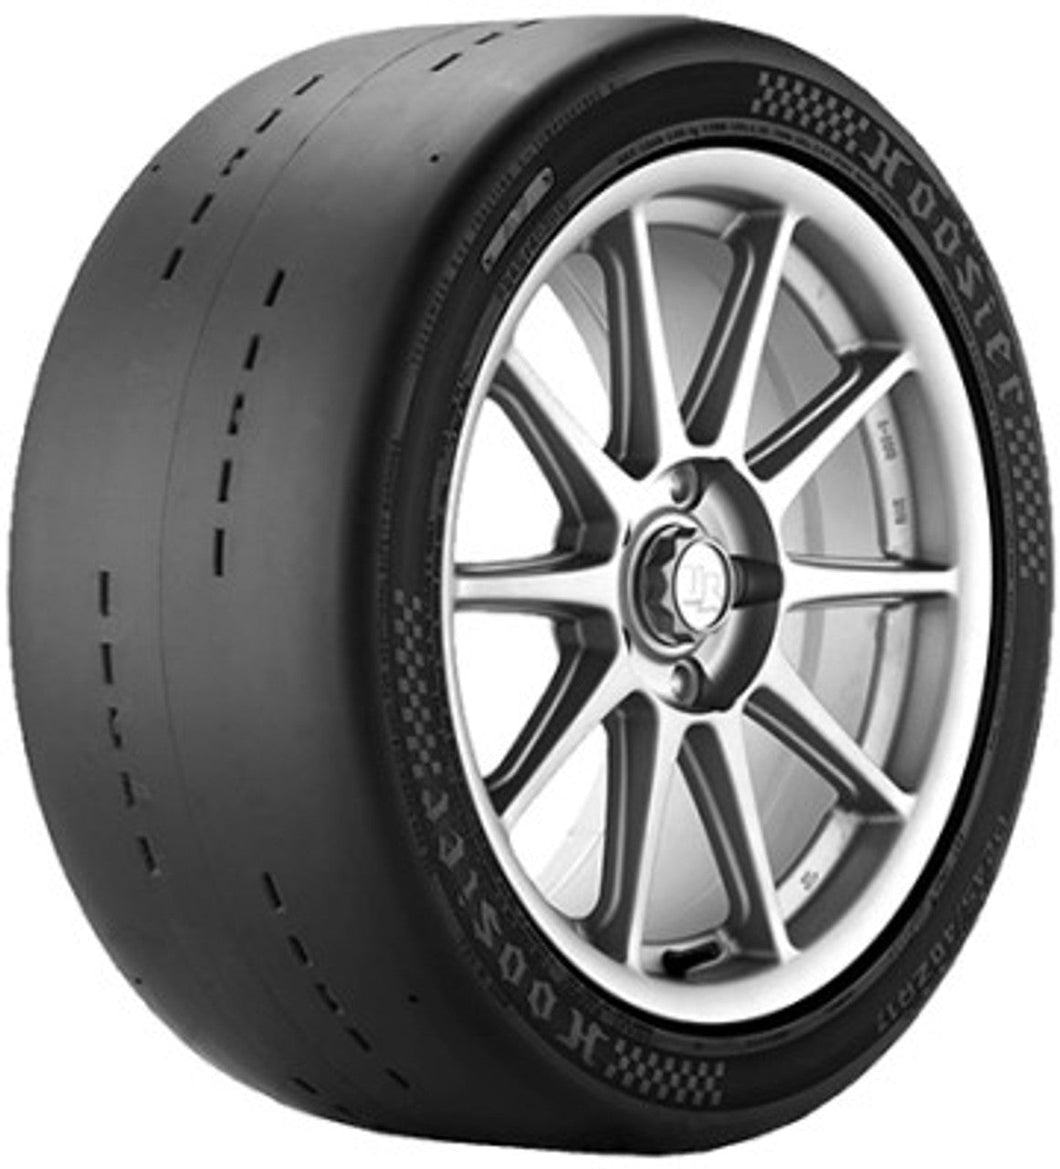 345/35 ZR18 Hoosier Tire Slick D.O.T Neumático